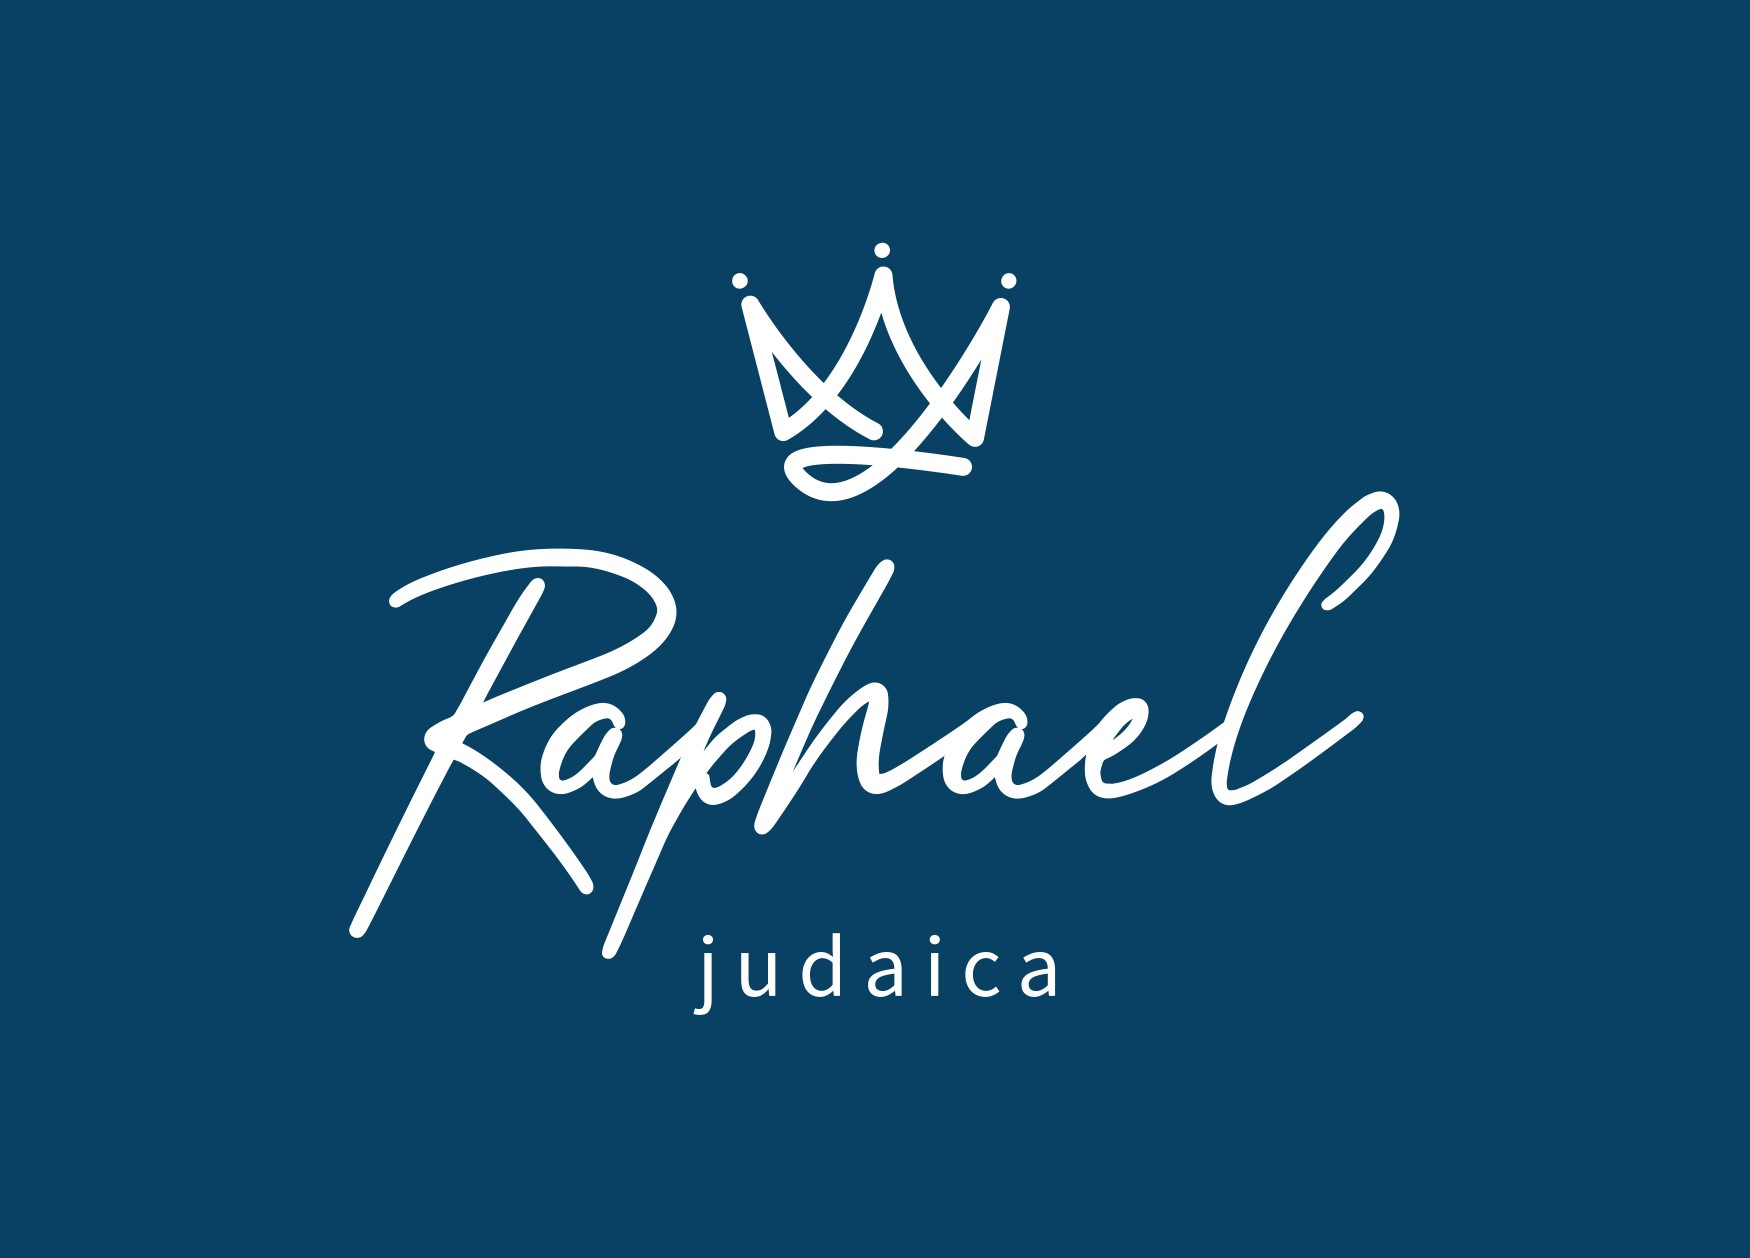 Judaica Raphael